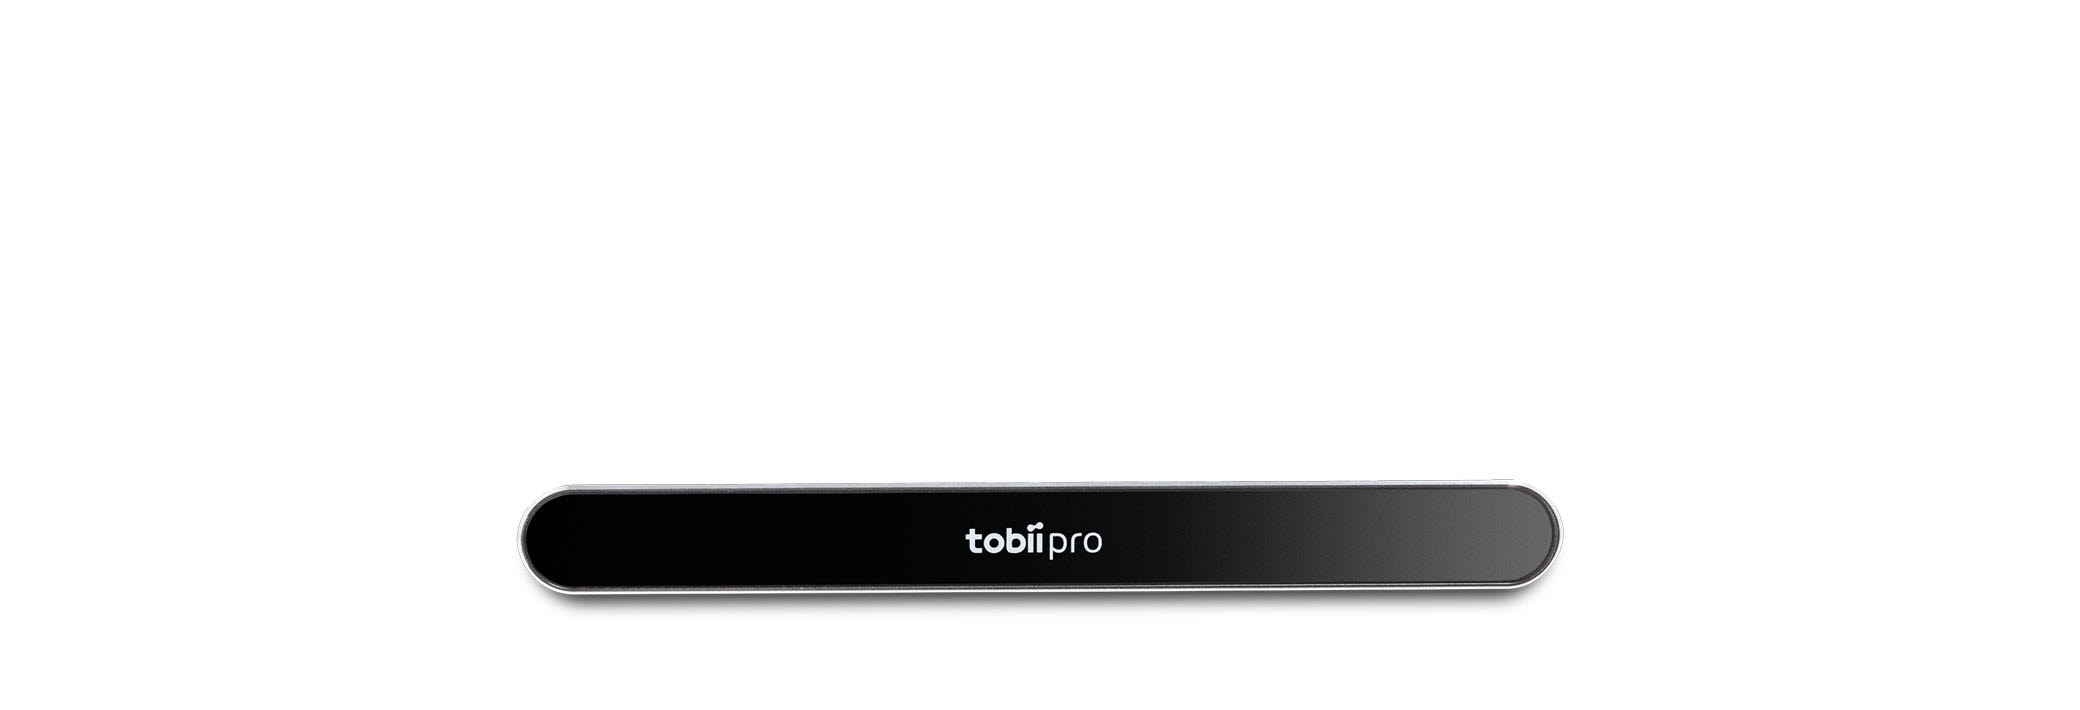 Quick and easy eye tracking - Tobii Pro Nano